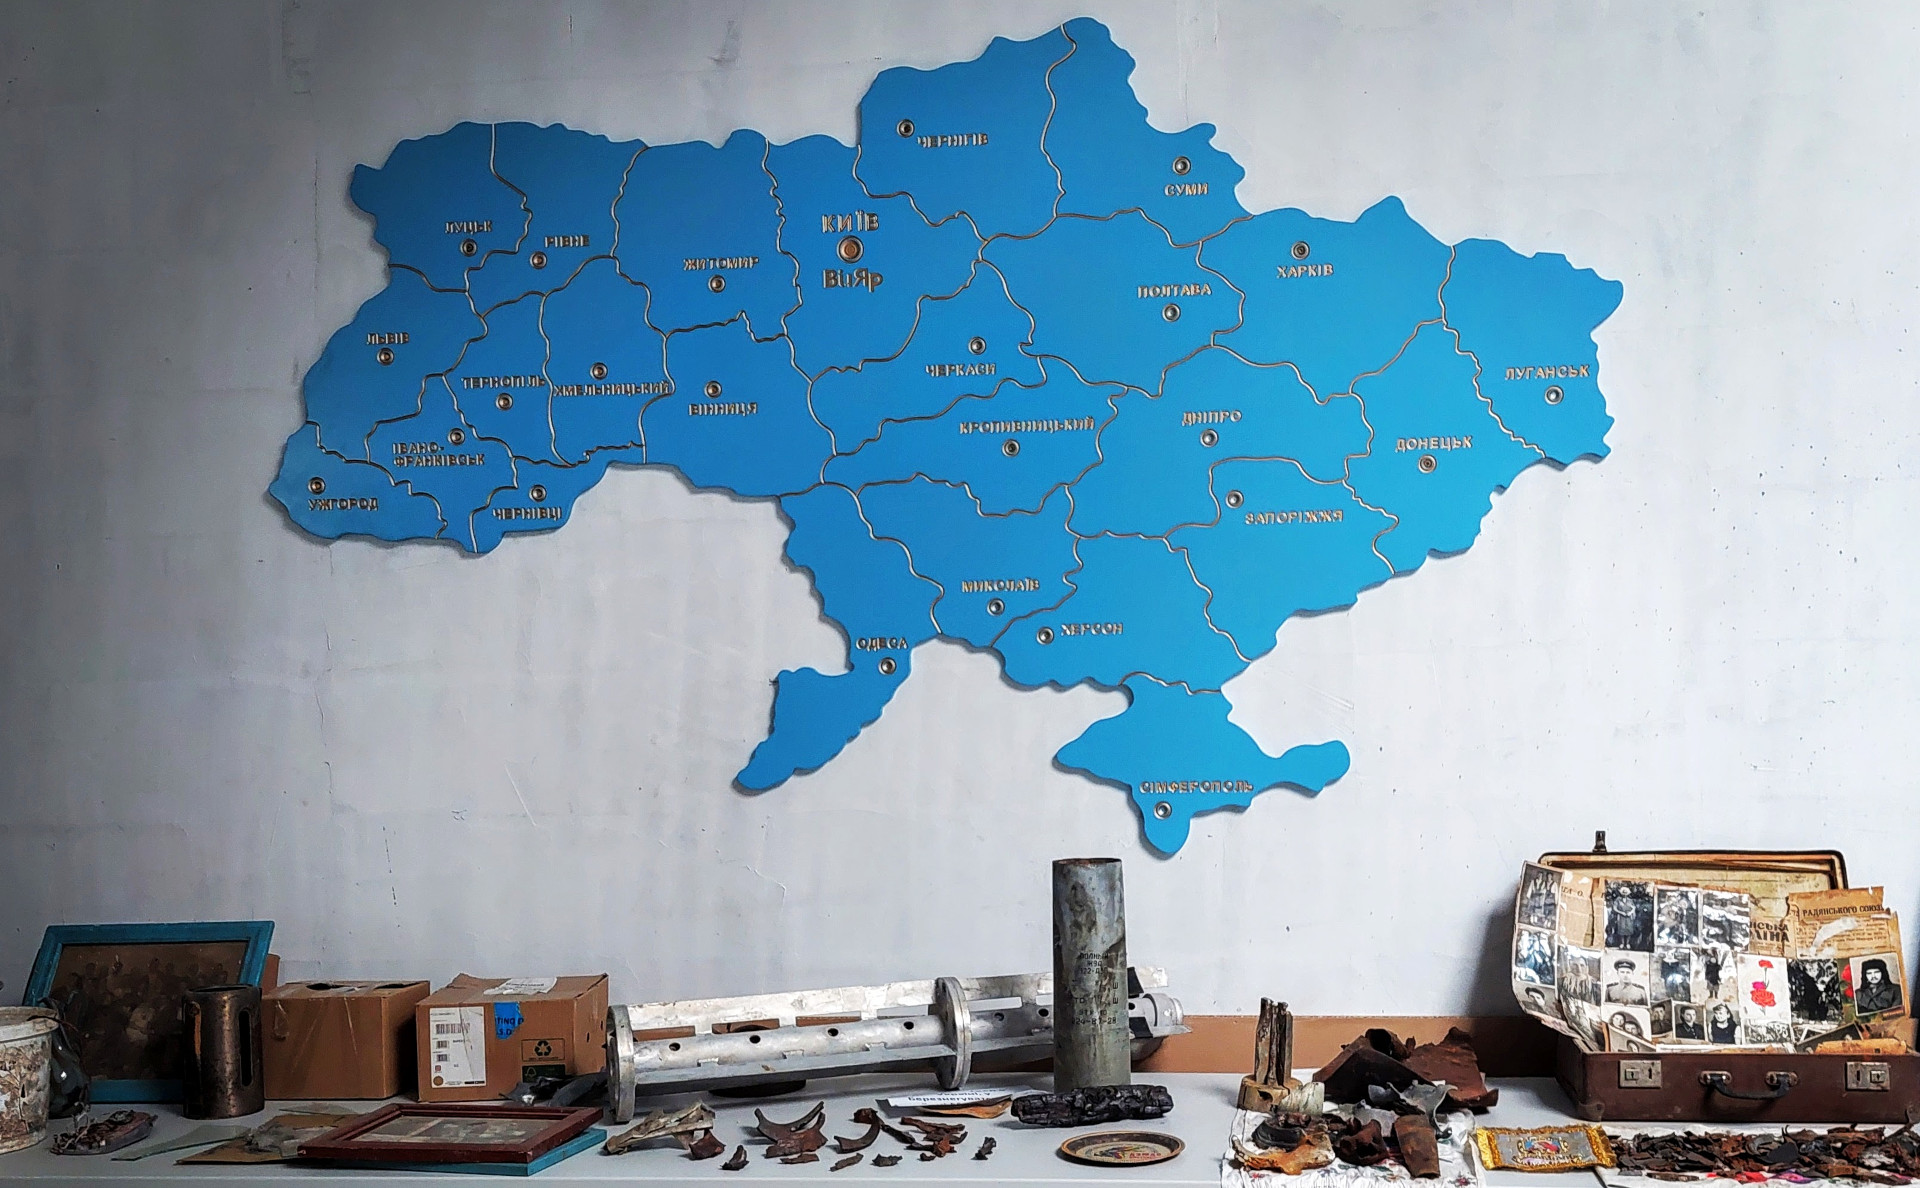 ukraine_map